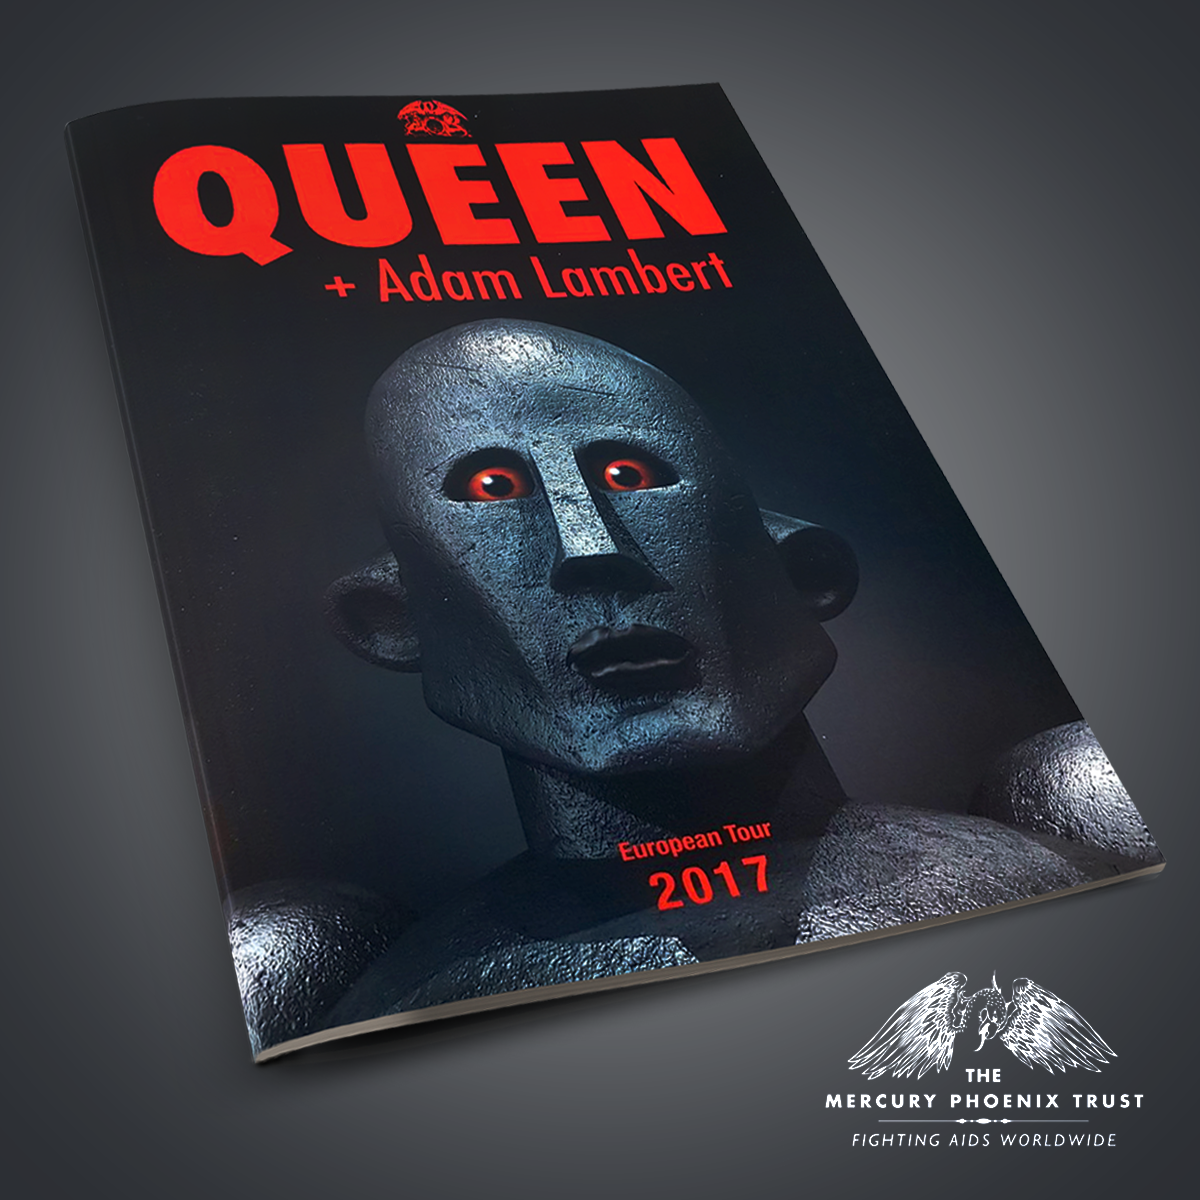 Queen + Adam Lambert - Queen And Adam Lambert Tour Programme 2017